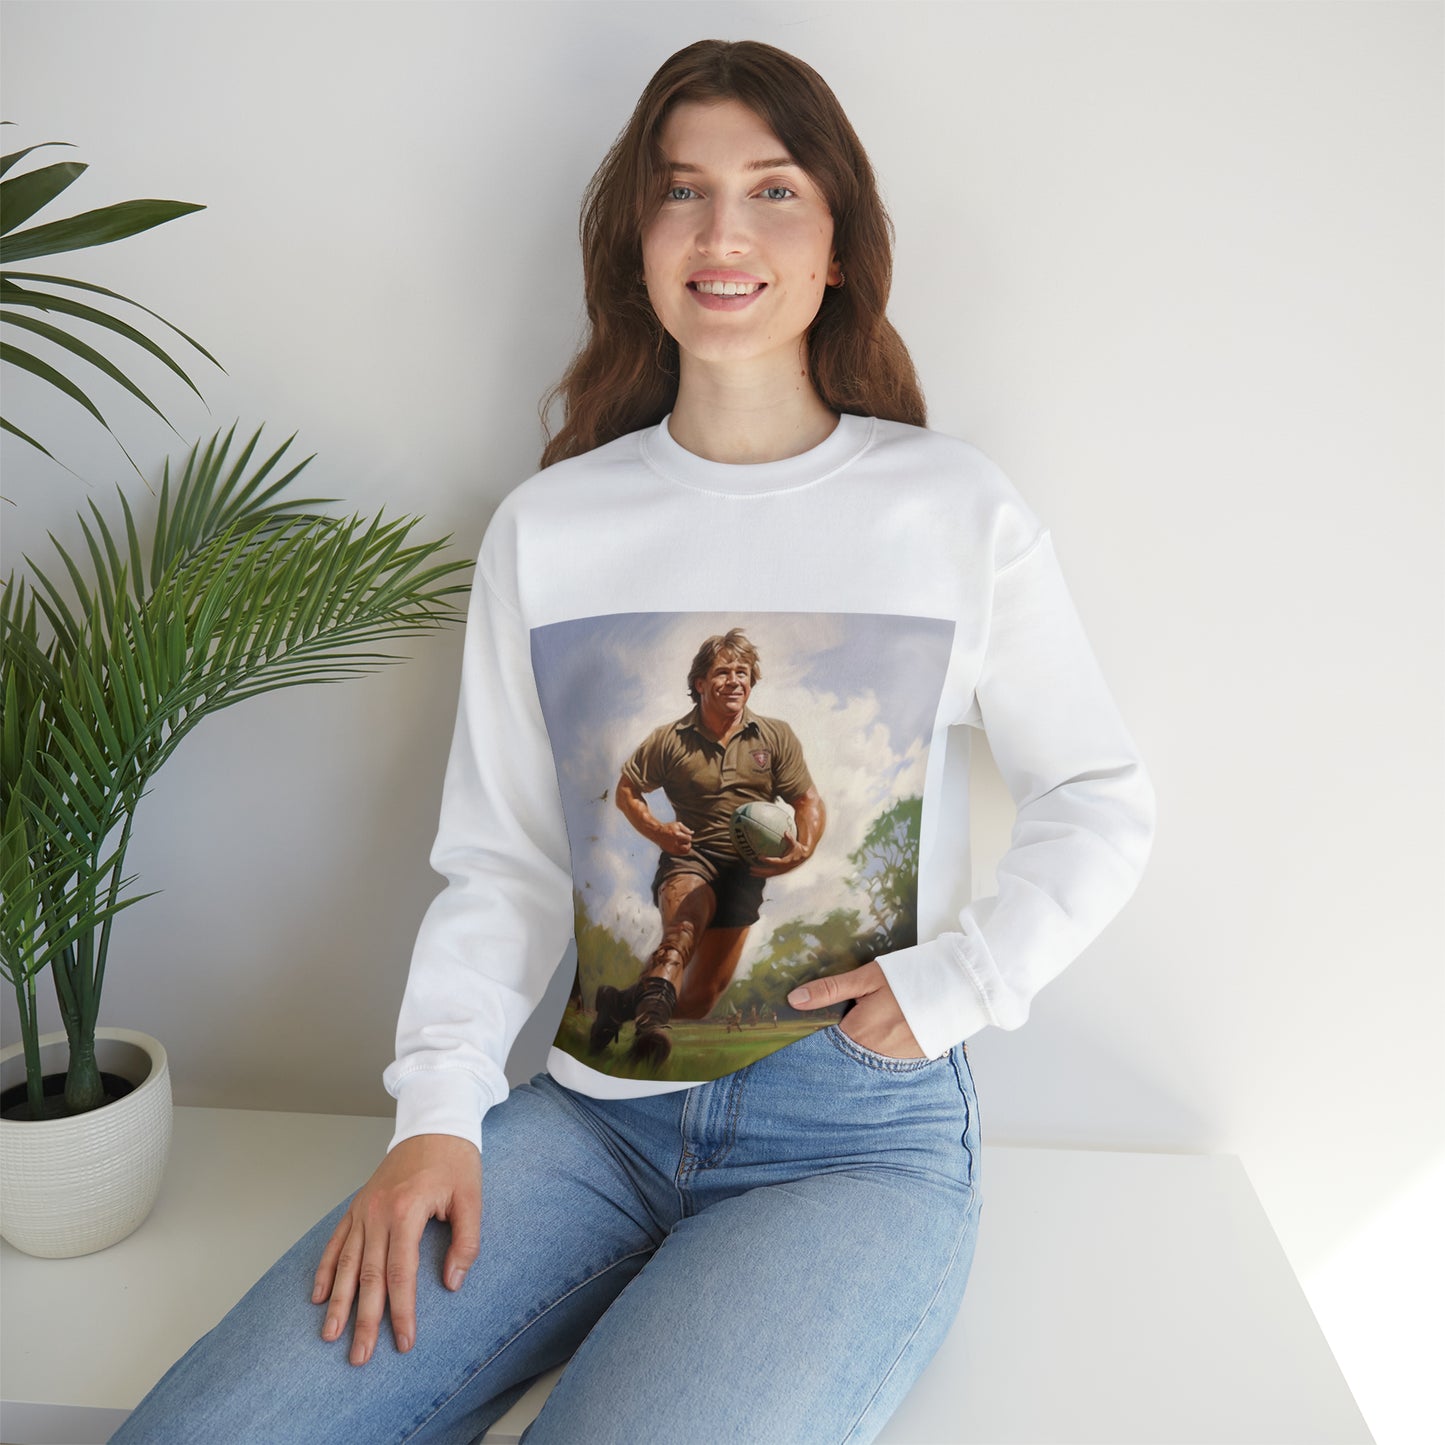 Steve Irwin 2 - light sweatshirts